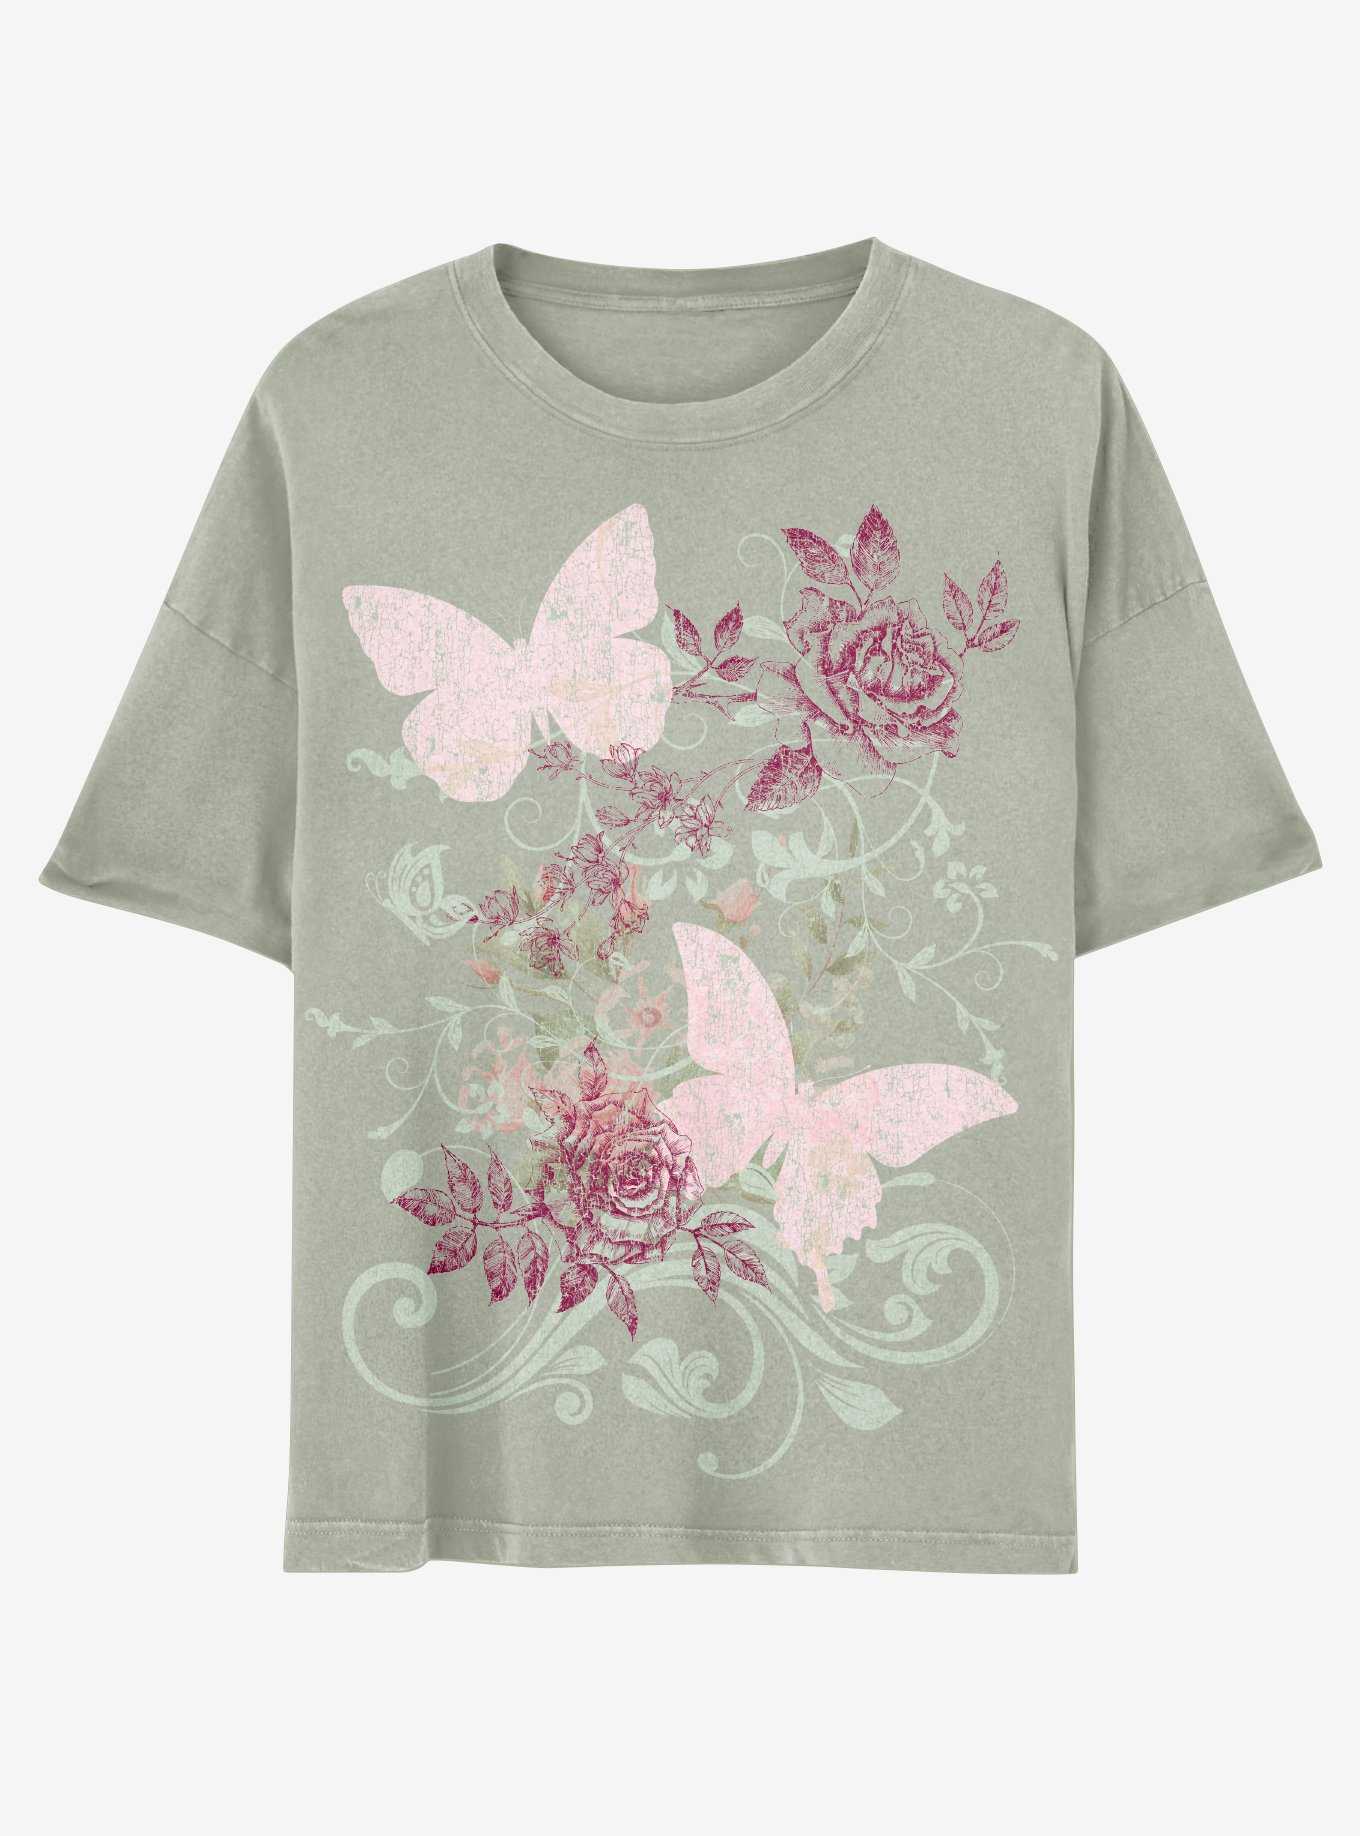 Butterfly Rose Boyfriend Fit Girls T-Shirt, , hi-res